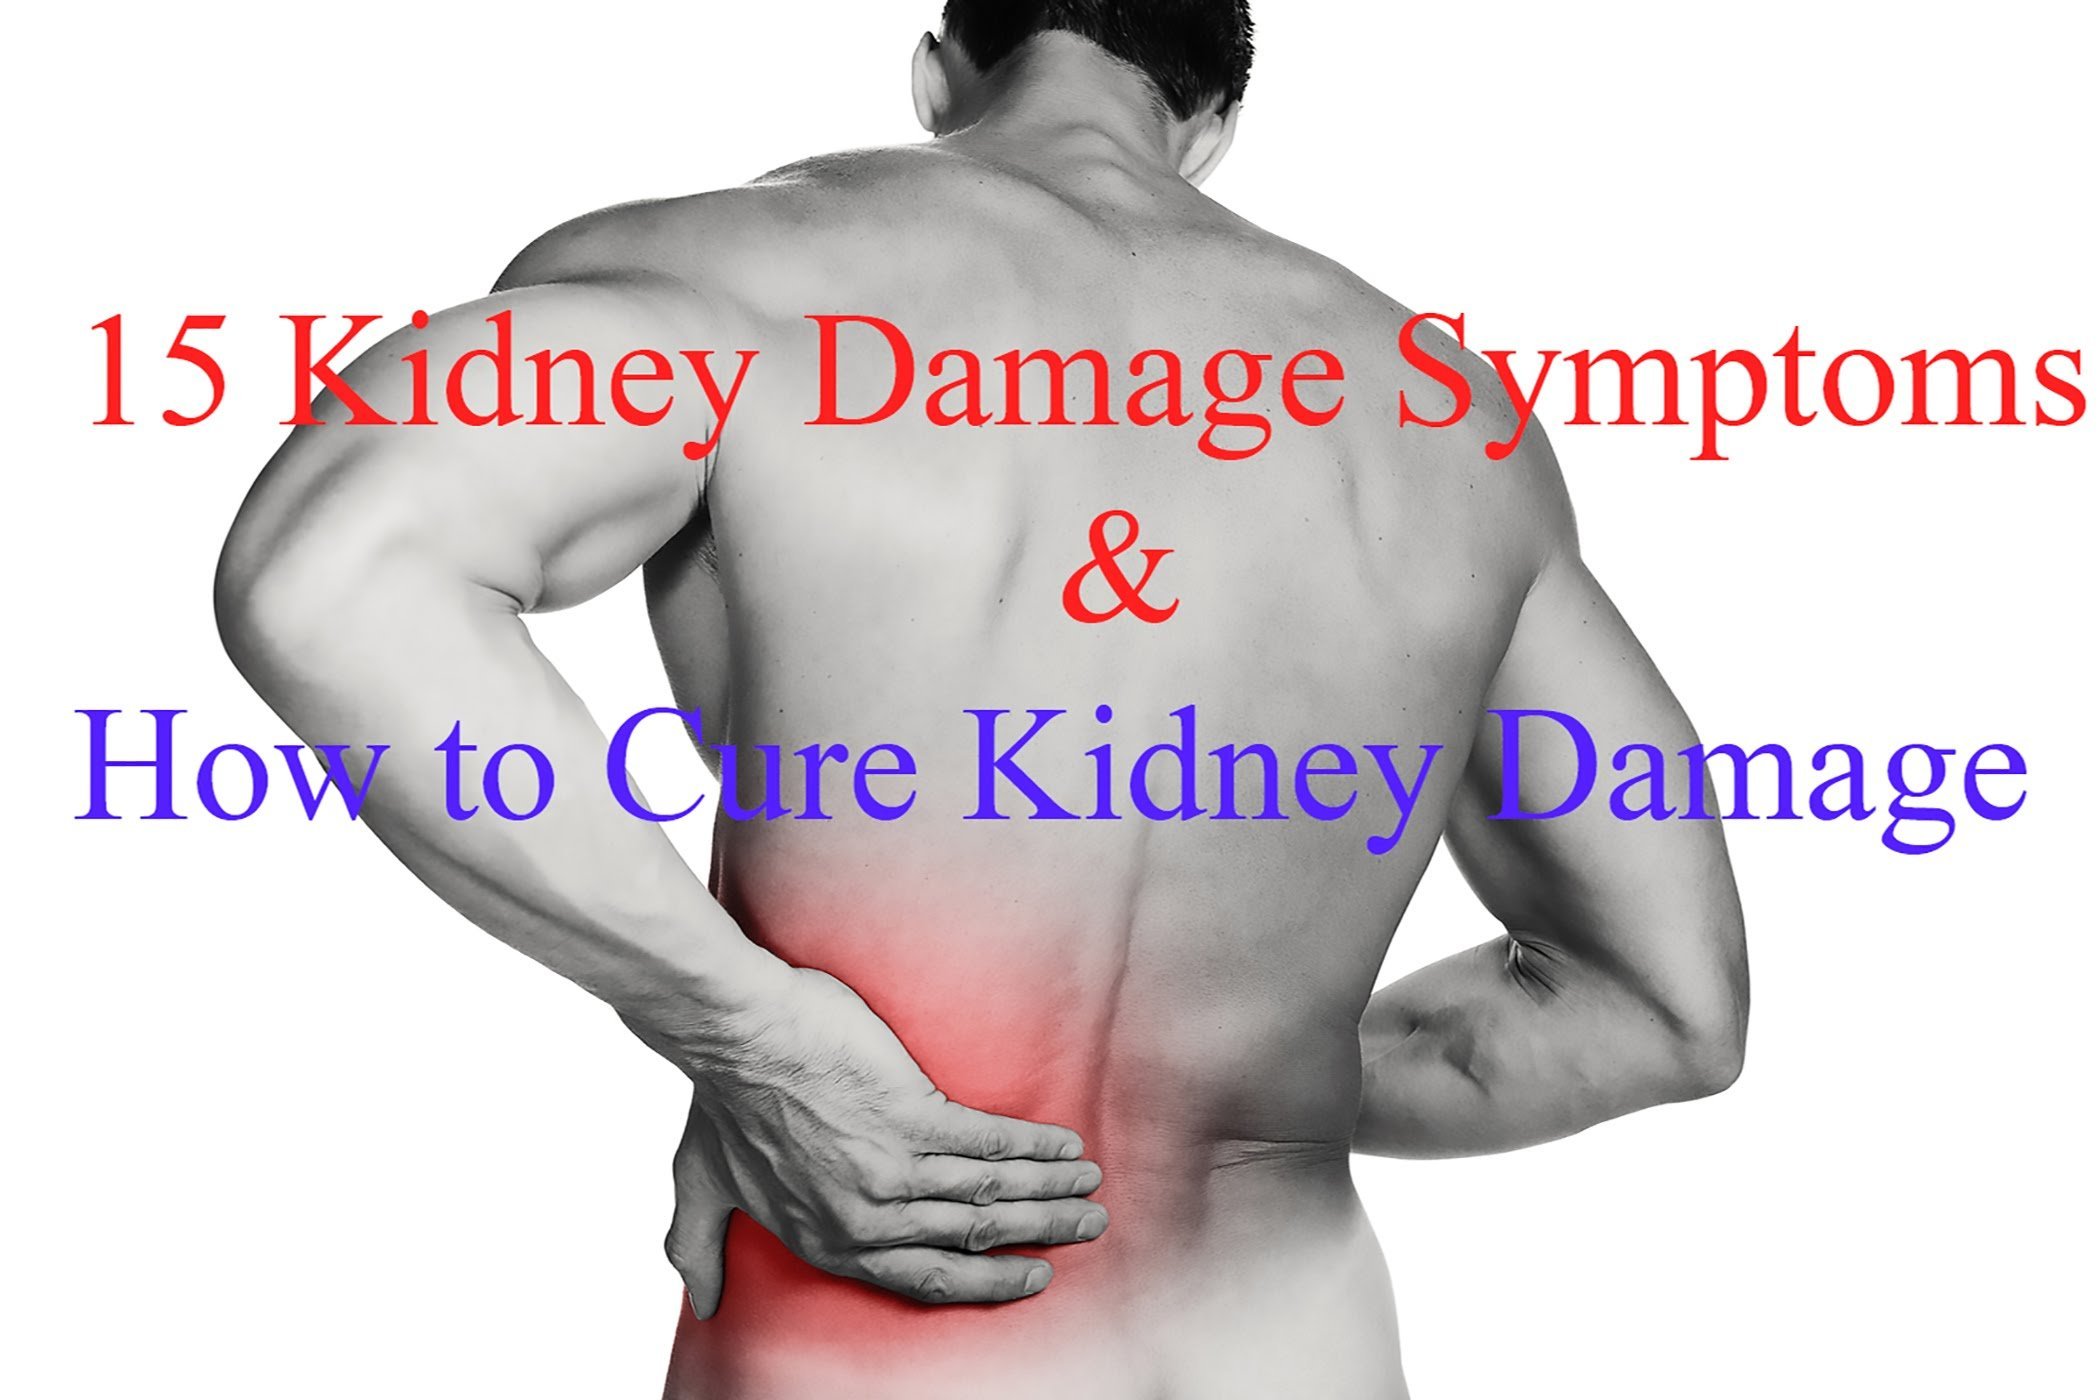 15 Kidney Damage Symptoms